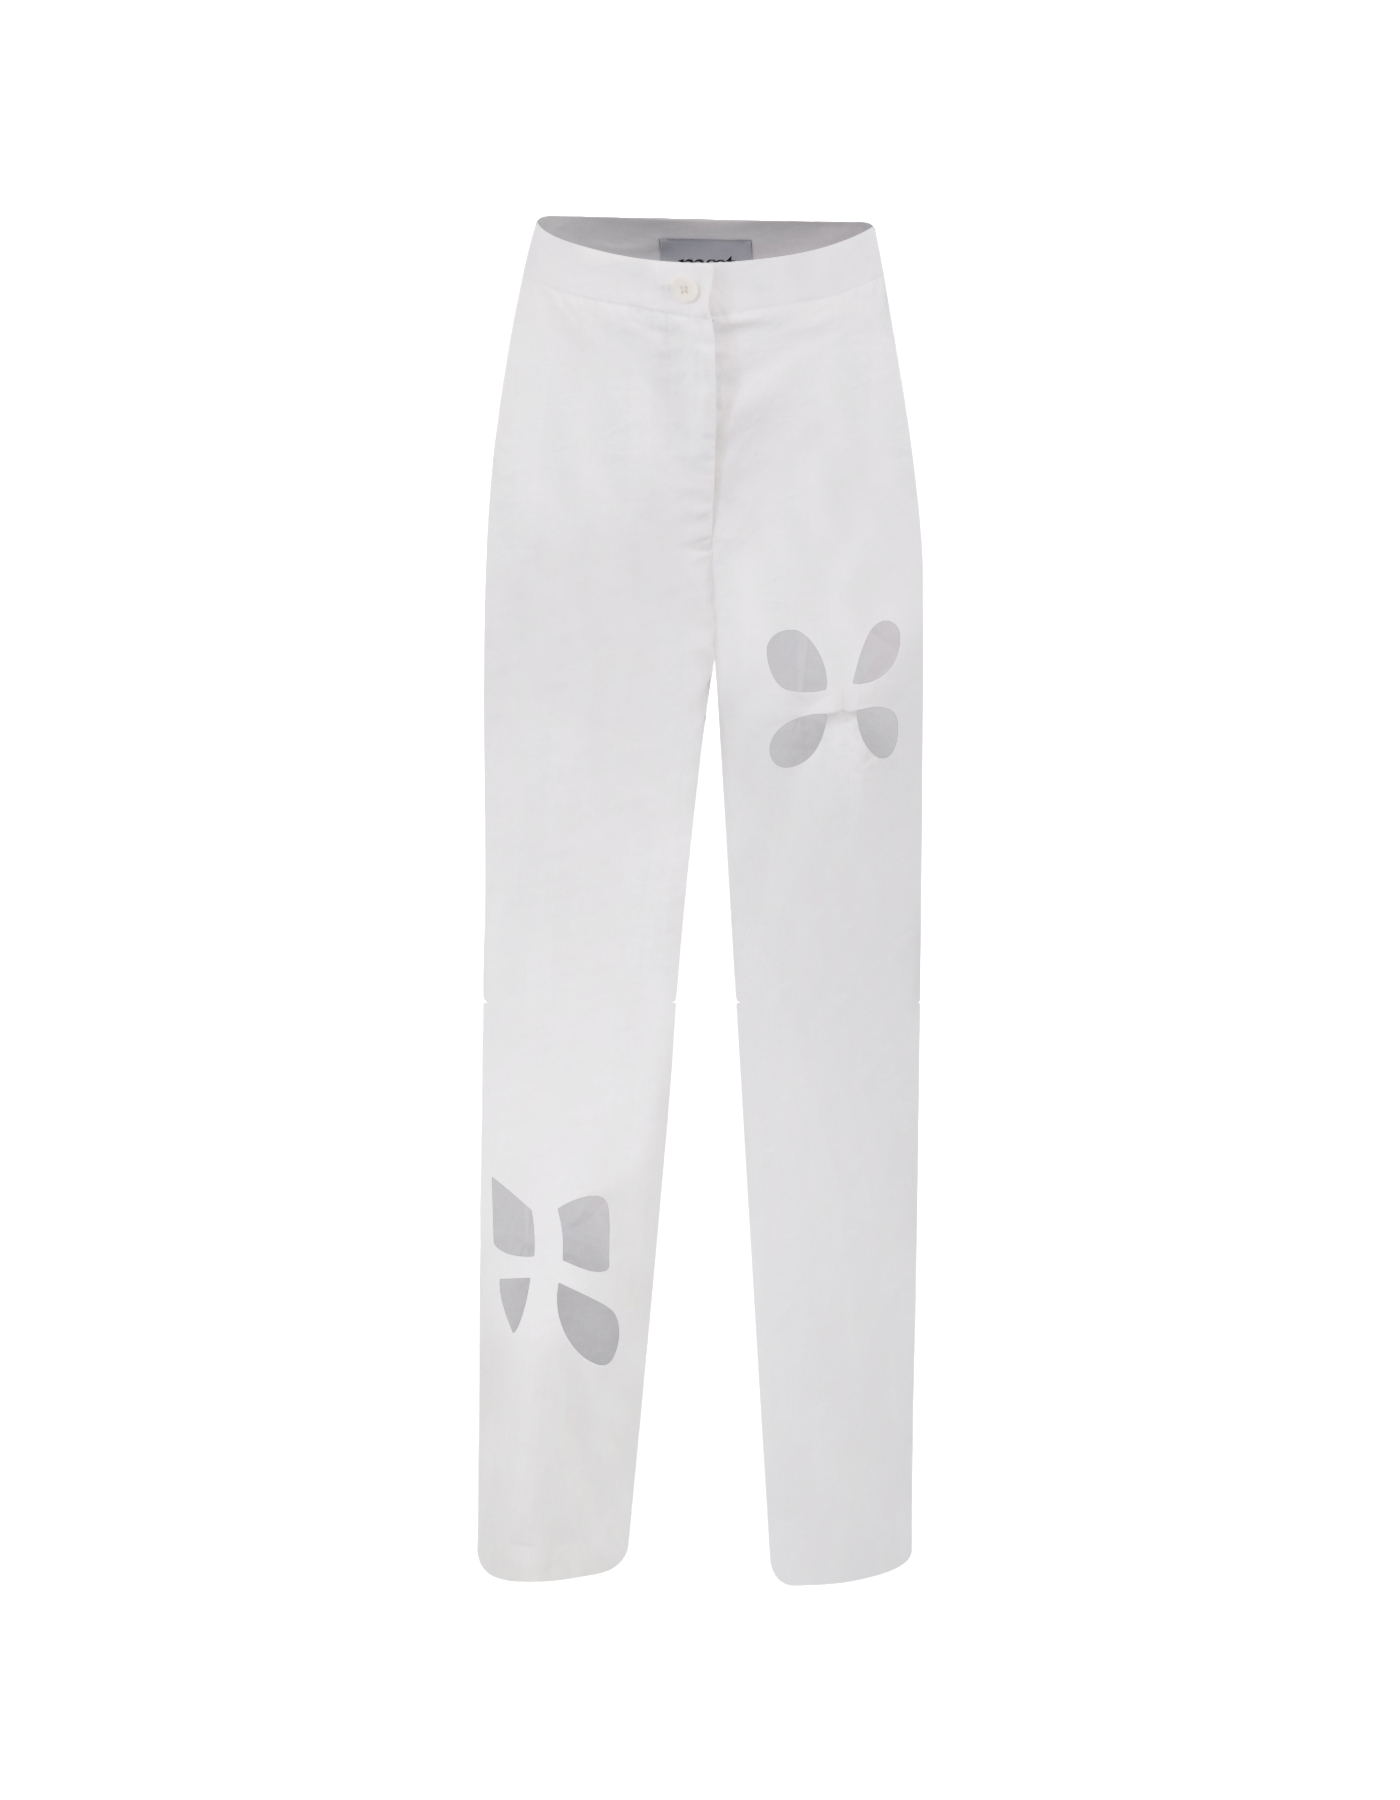 TERFIL White Linen Pants von MAET